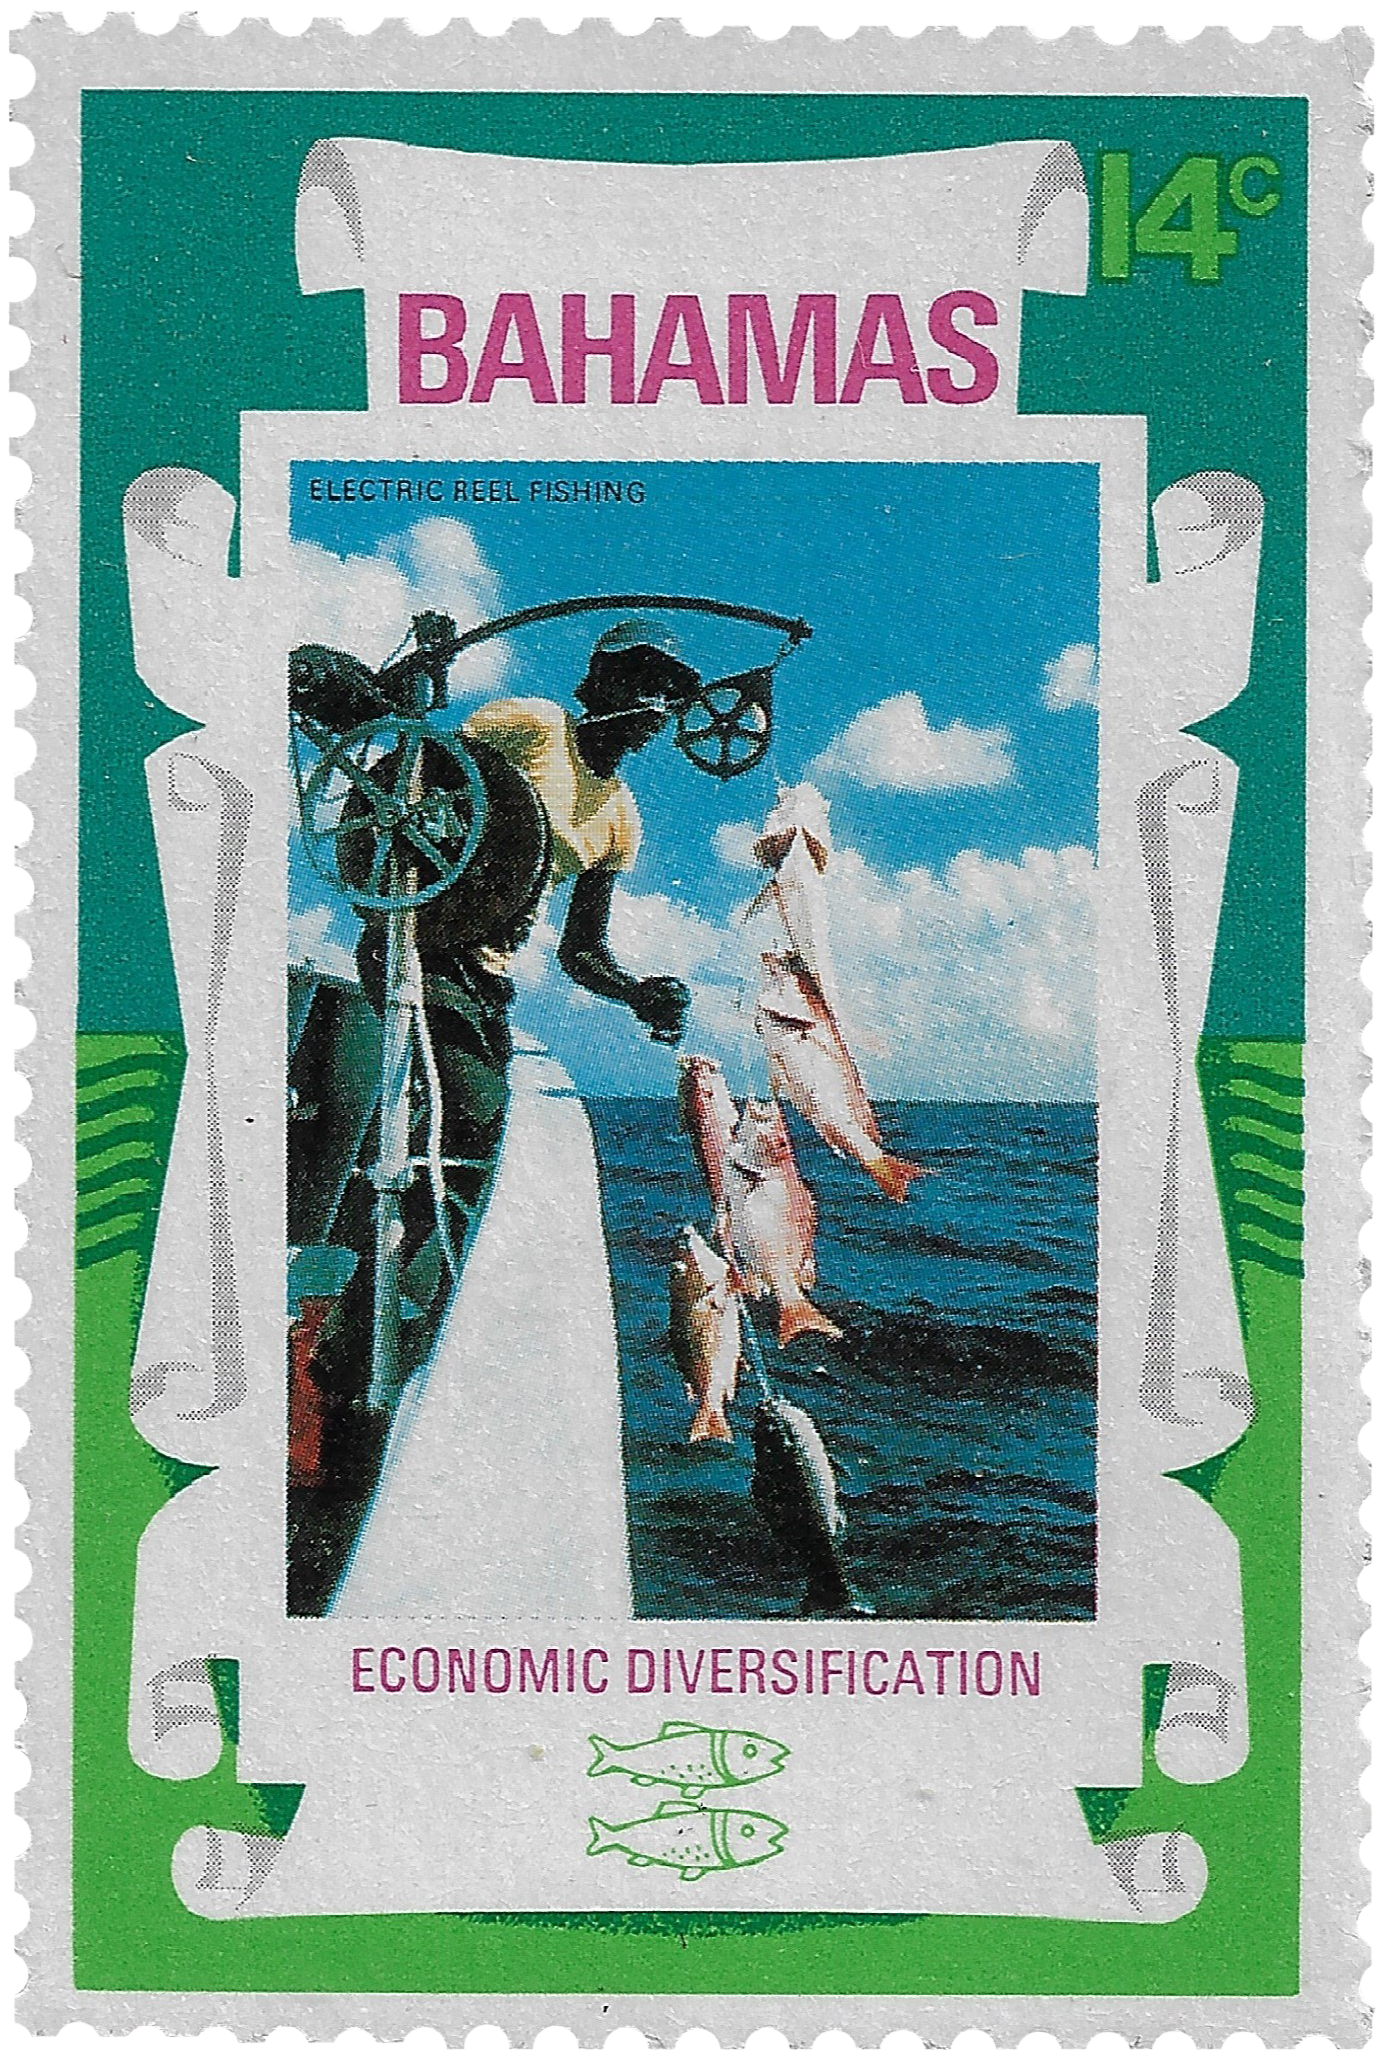 14c 1975, Economic Diversification, Electric Reel Fishing